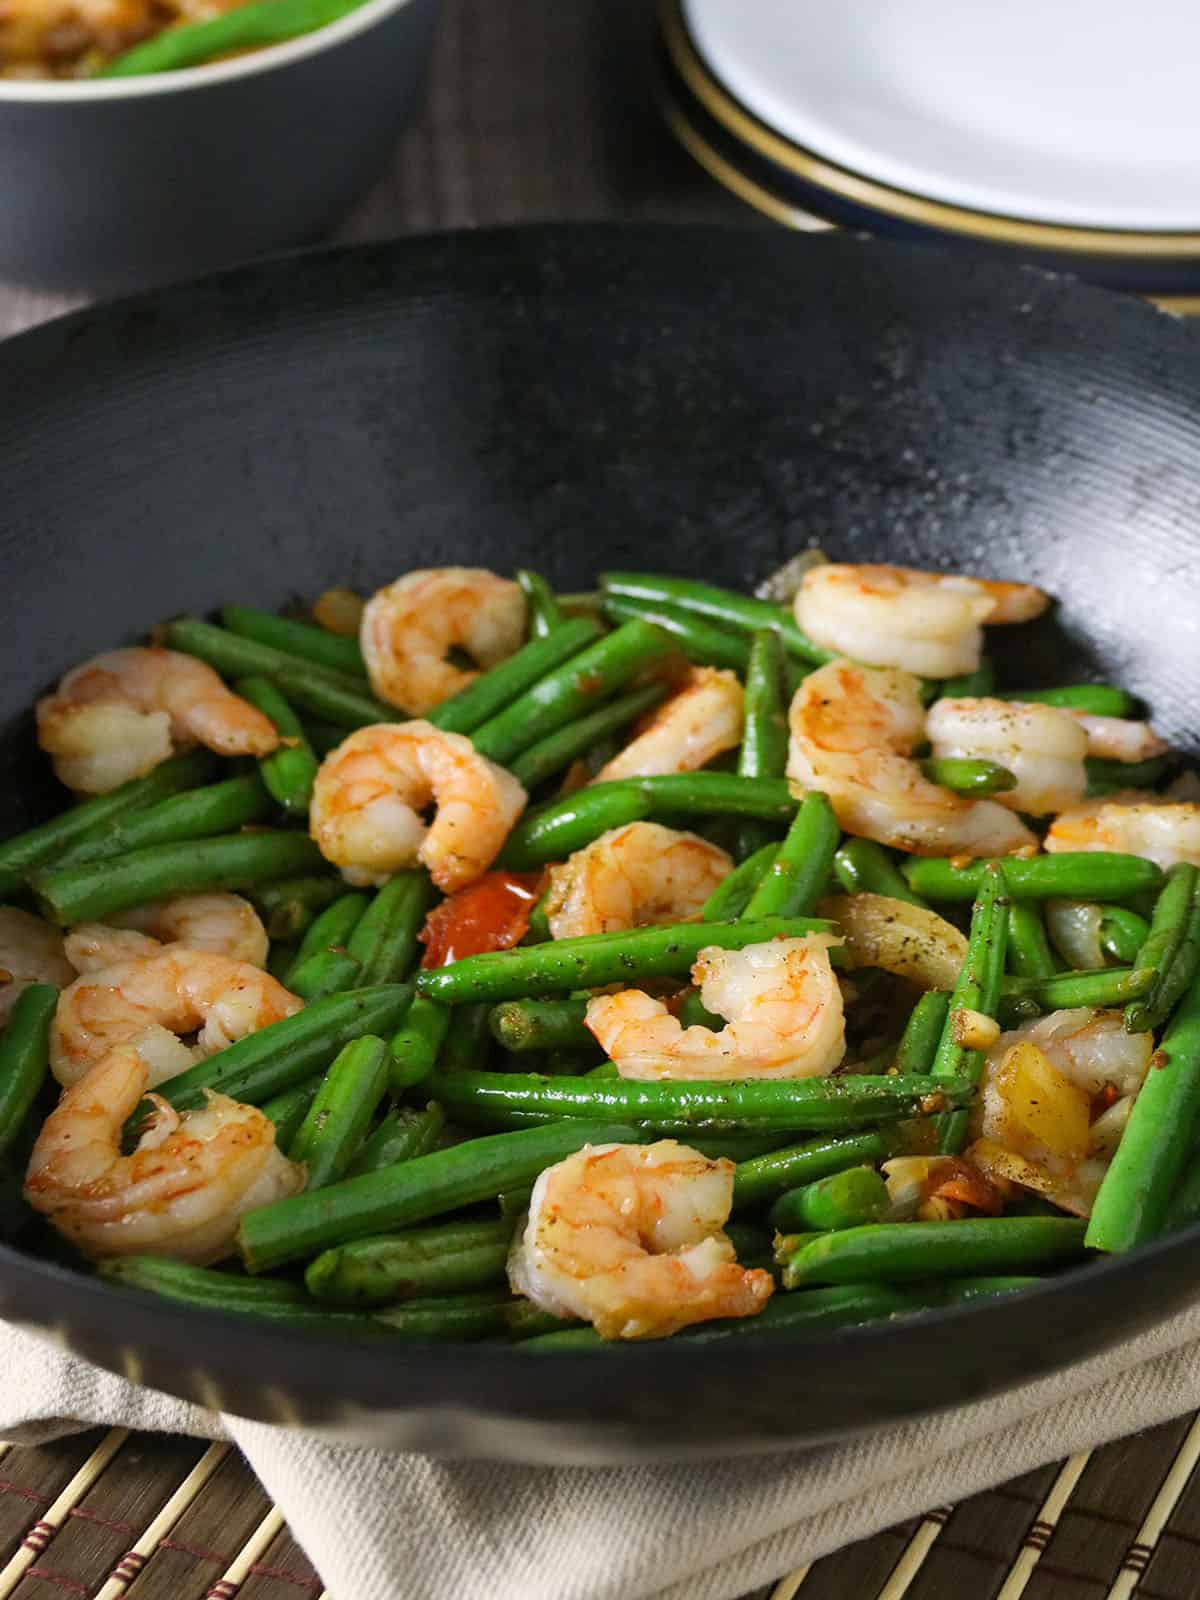 Green Bean and Shrimp Stir-fry in a wok